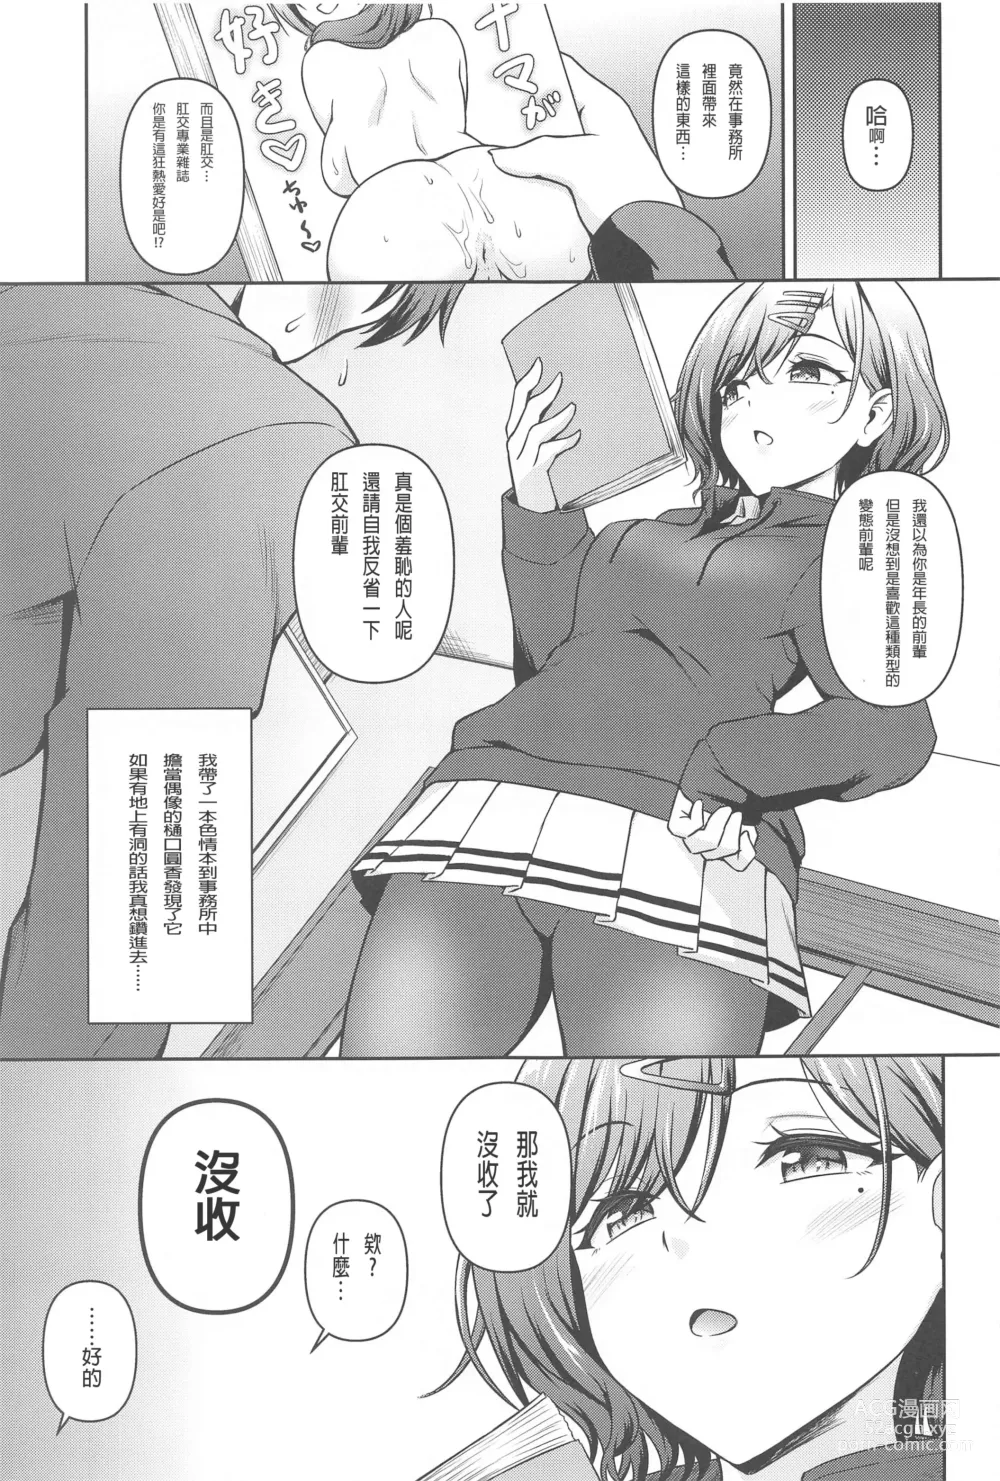 Page 5 of doujinshi Mado Ana